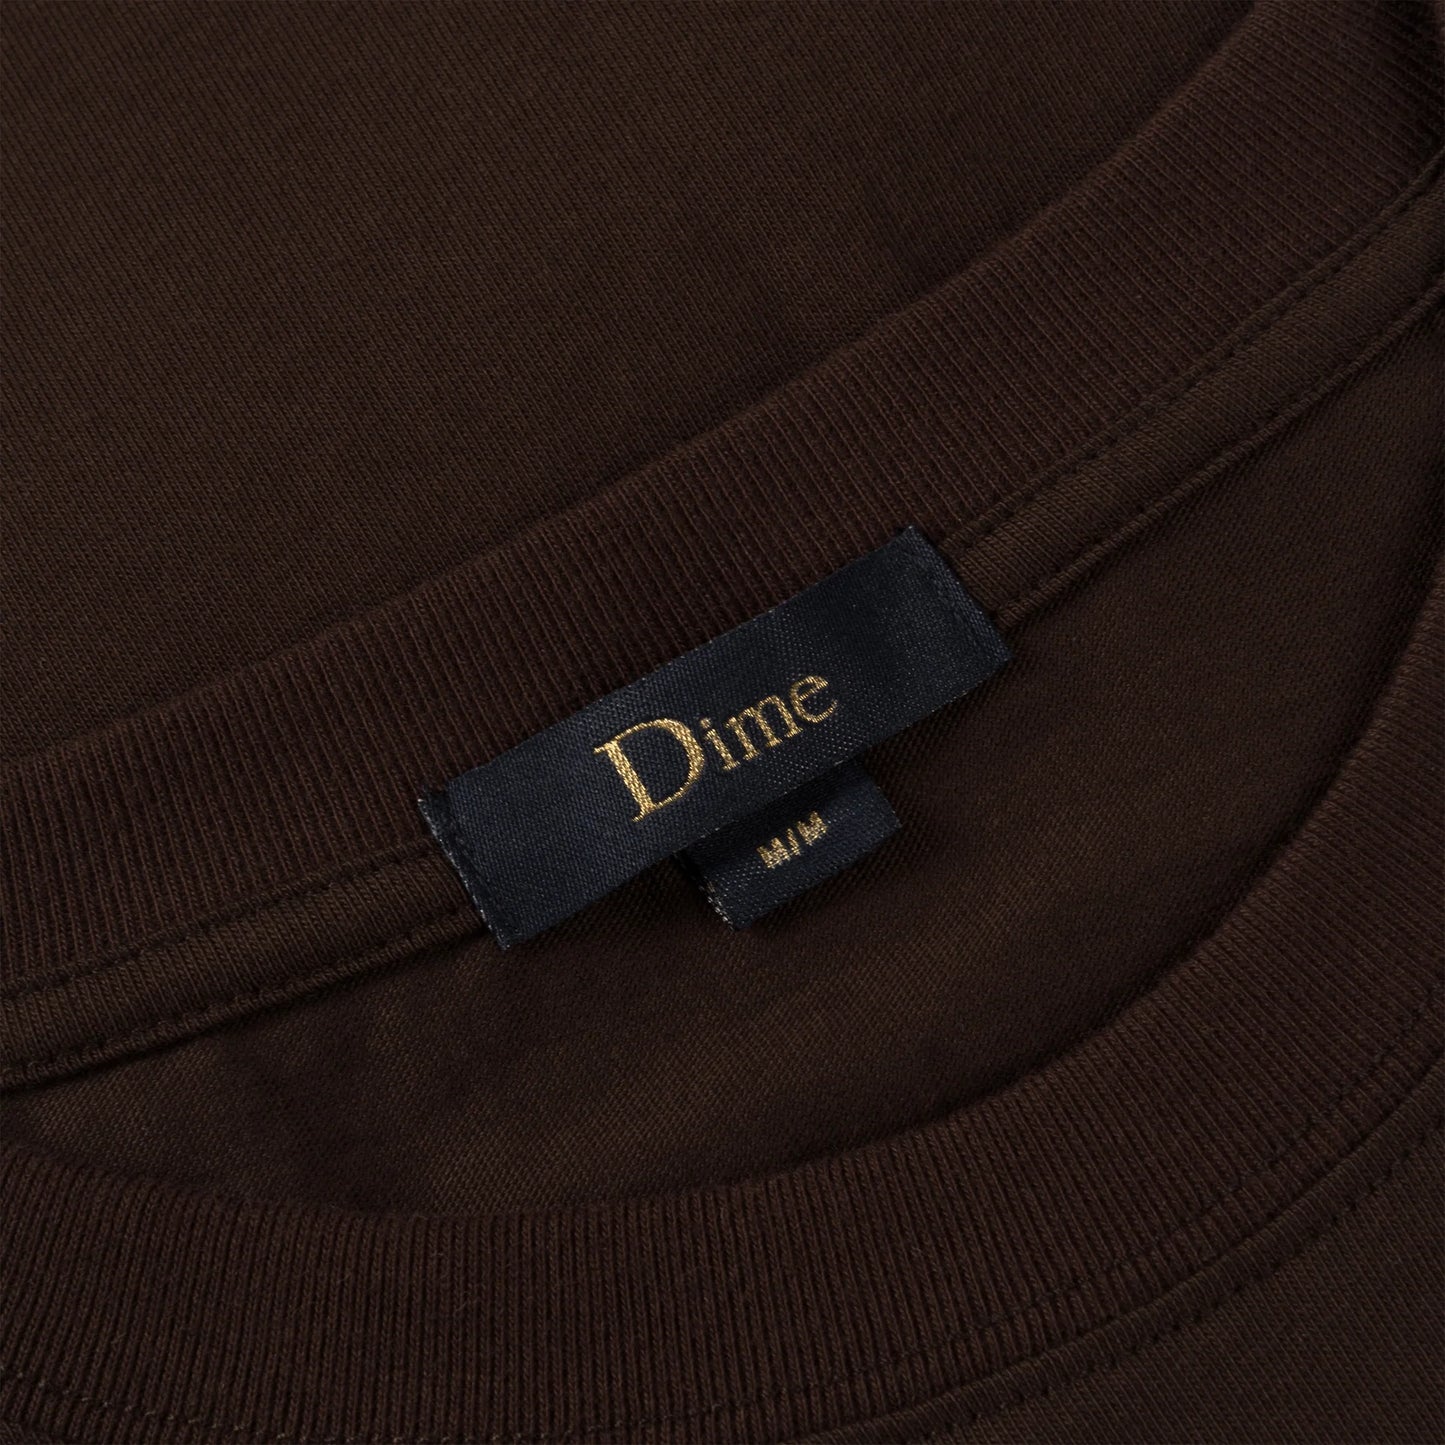 Dime Classic Small Logo T-Shirt Deep Brown